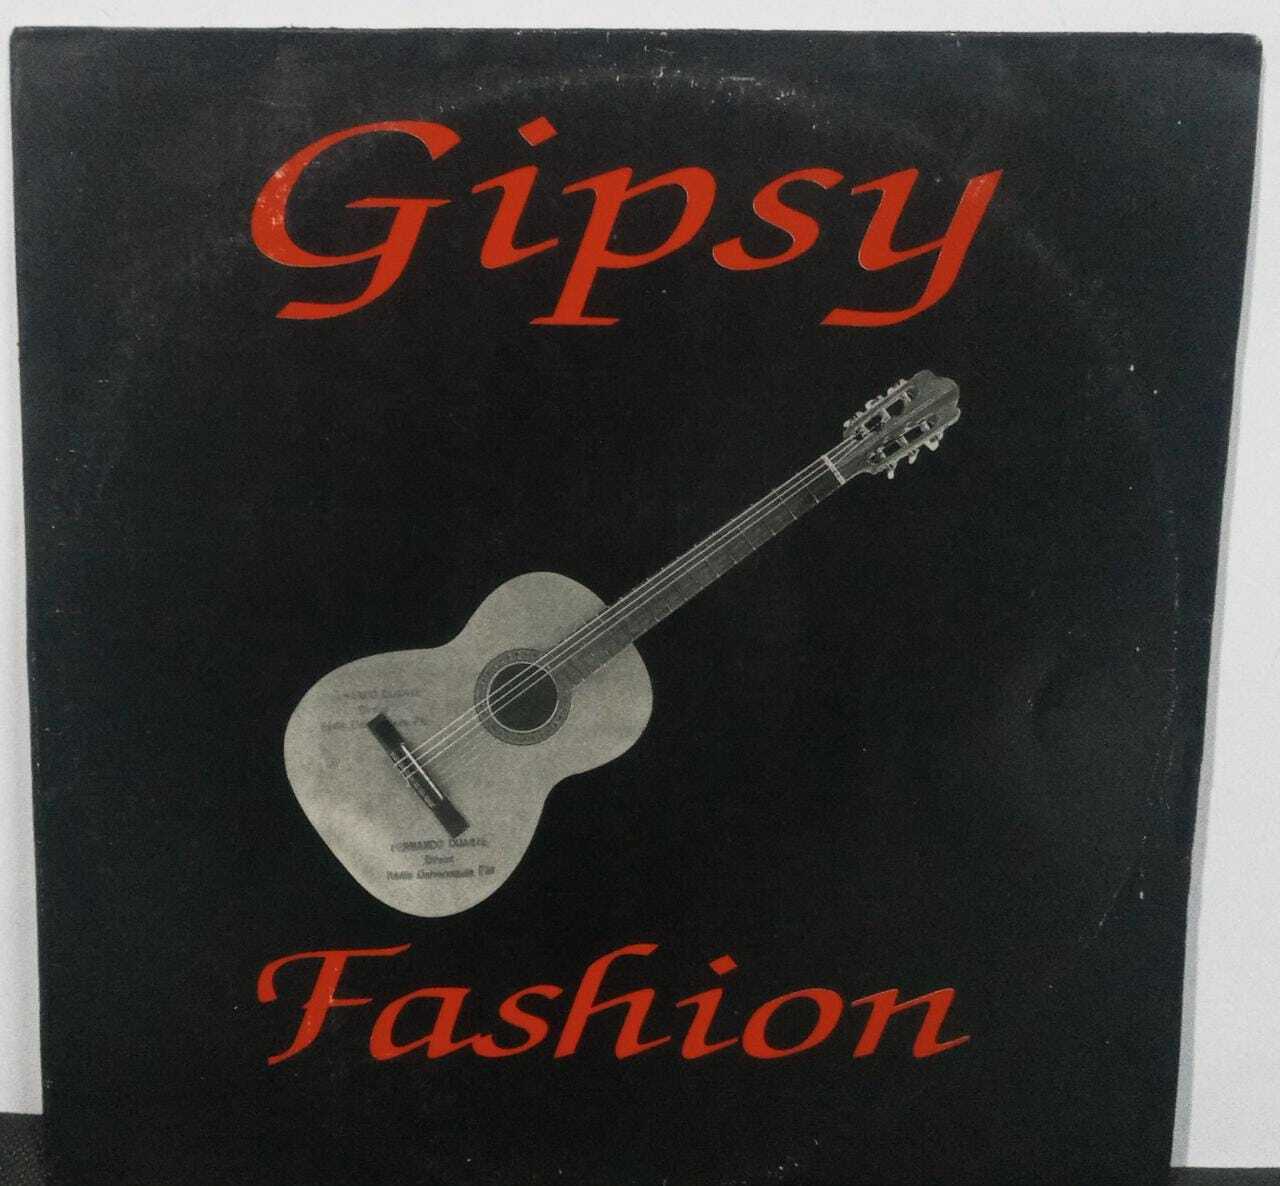 Vinil - Gipsy Kings - Gipsy Fashion